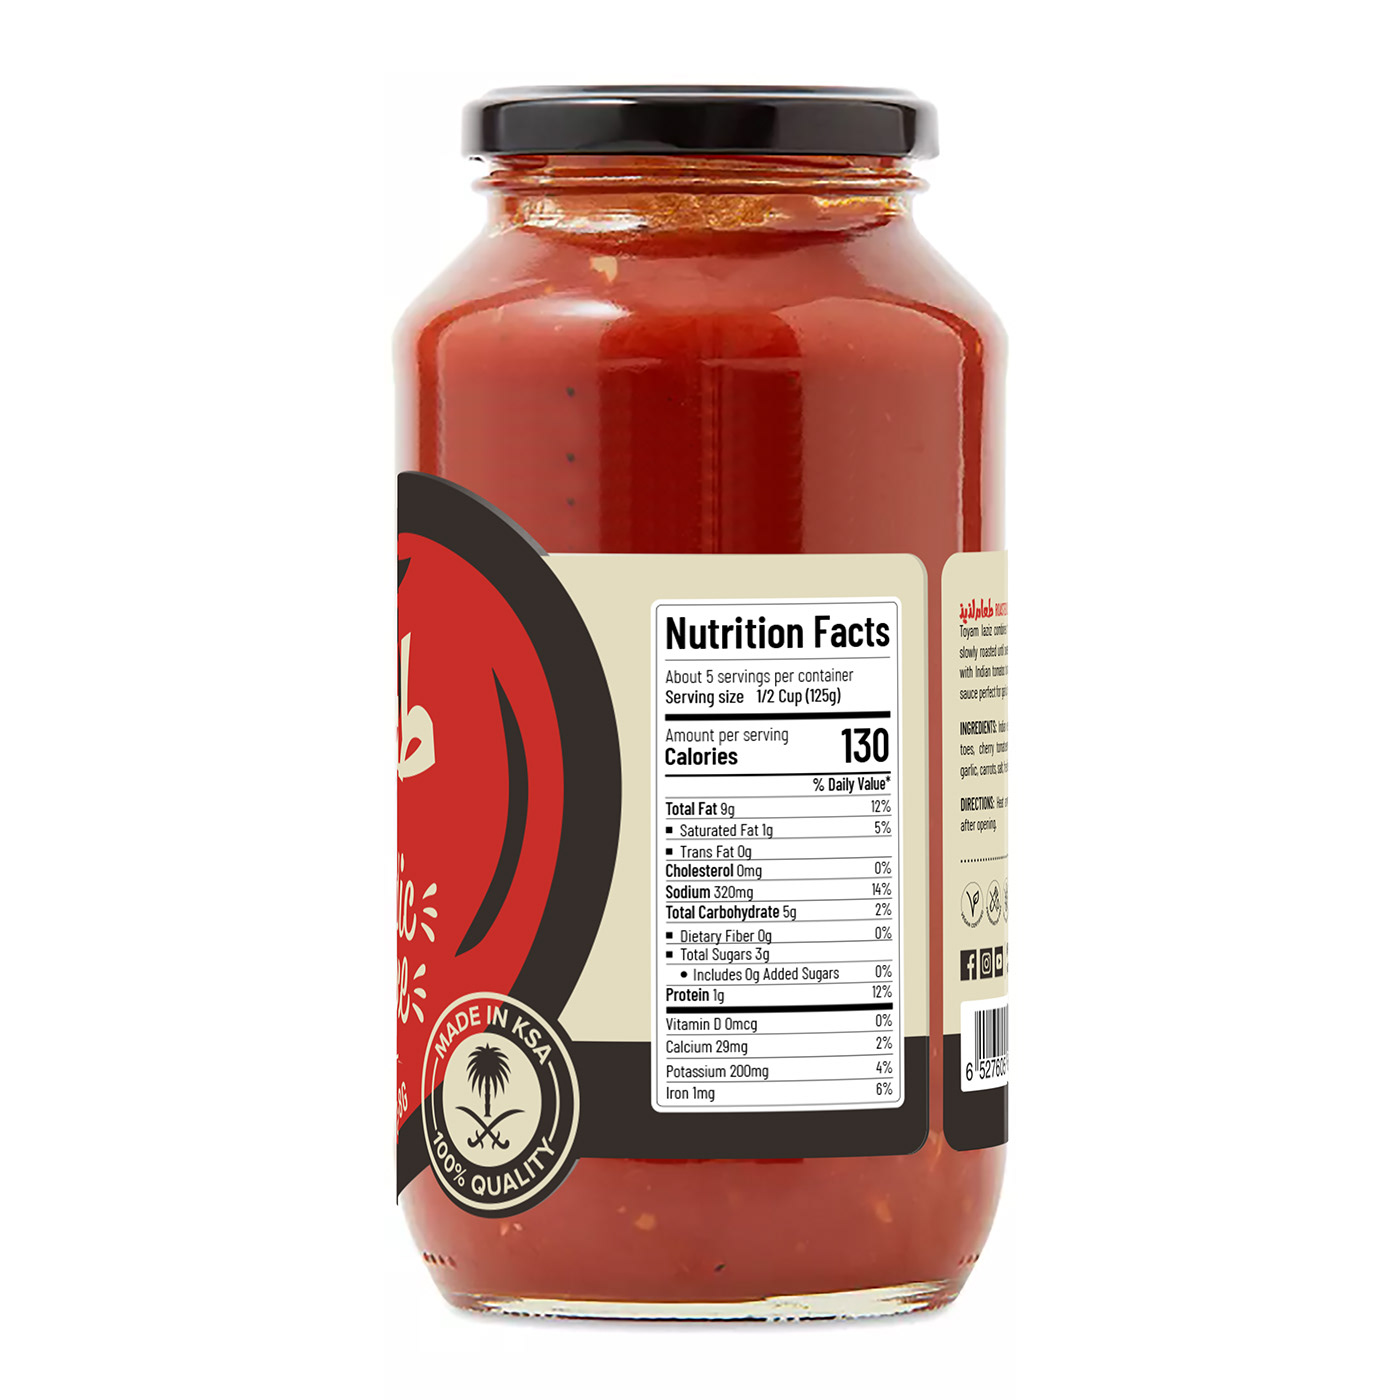 design Label label design Packaging ROASTED GARLIC SAUCE sauce tomato sauce